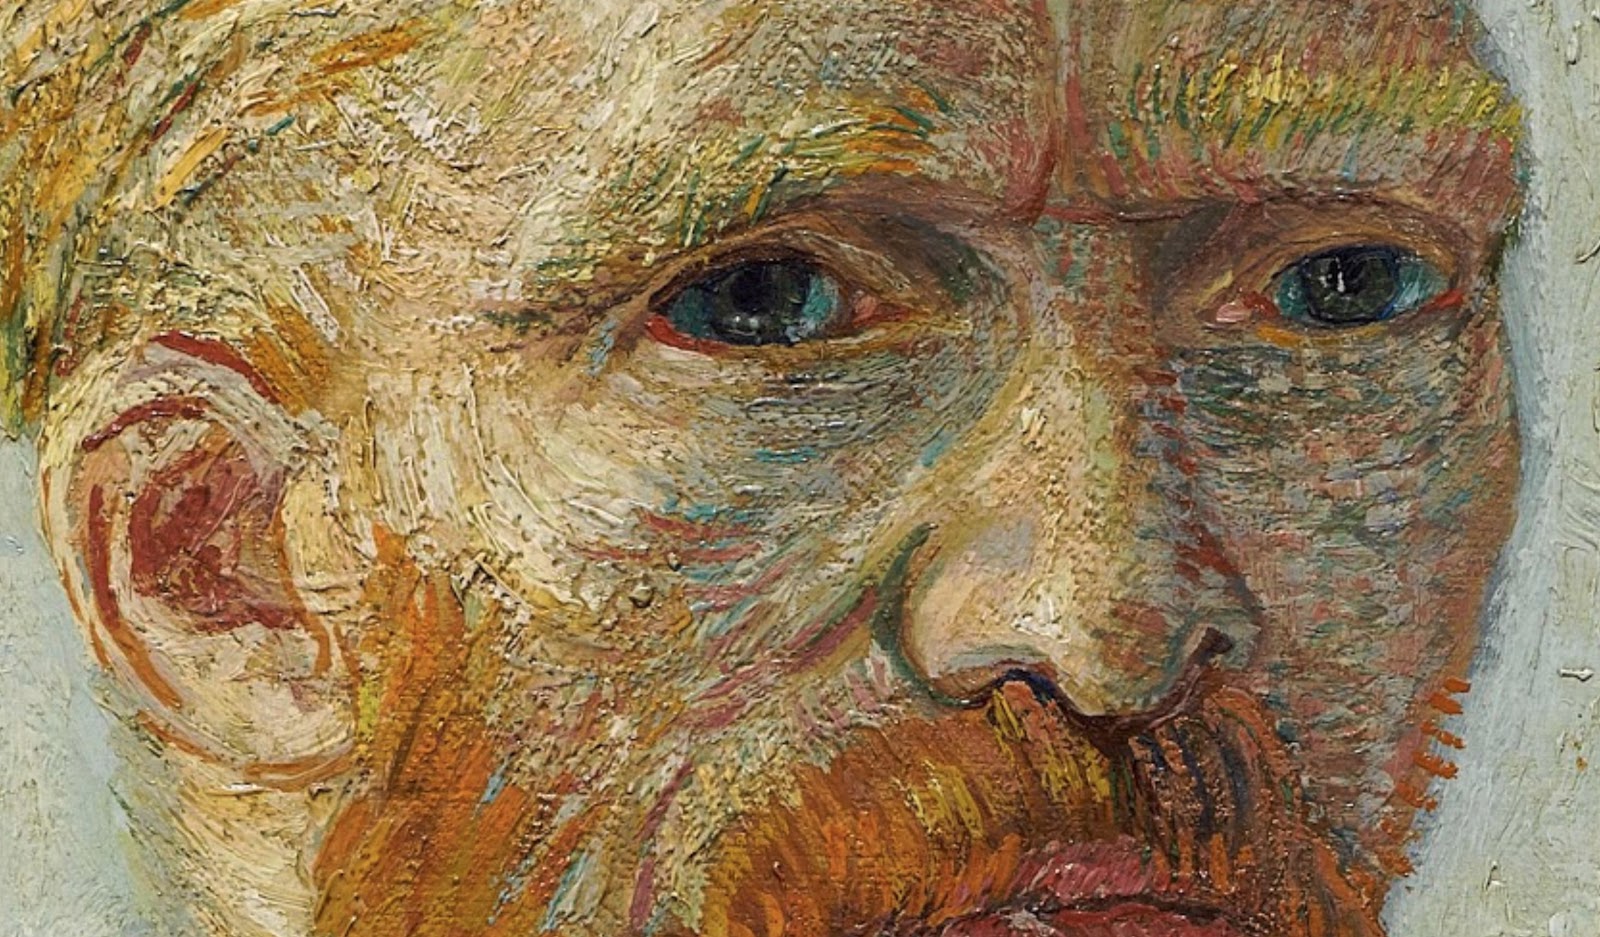 Vincent+Van+Gogh-1853-1890 (493).jpg